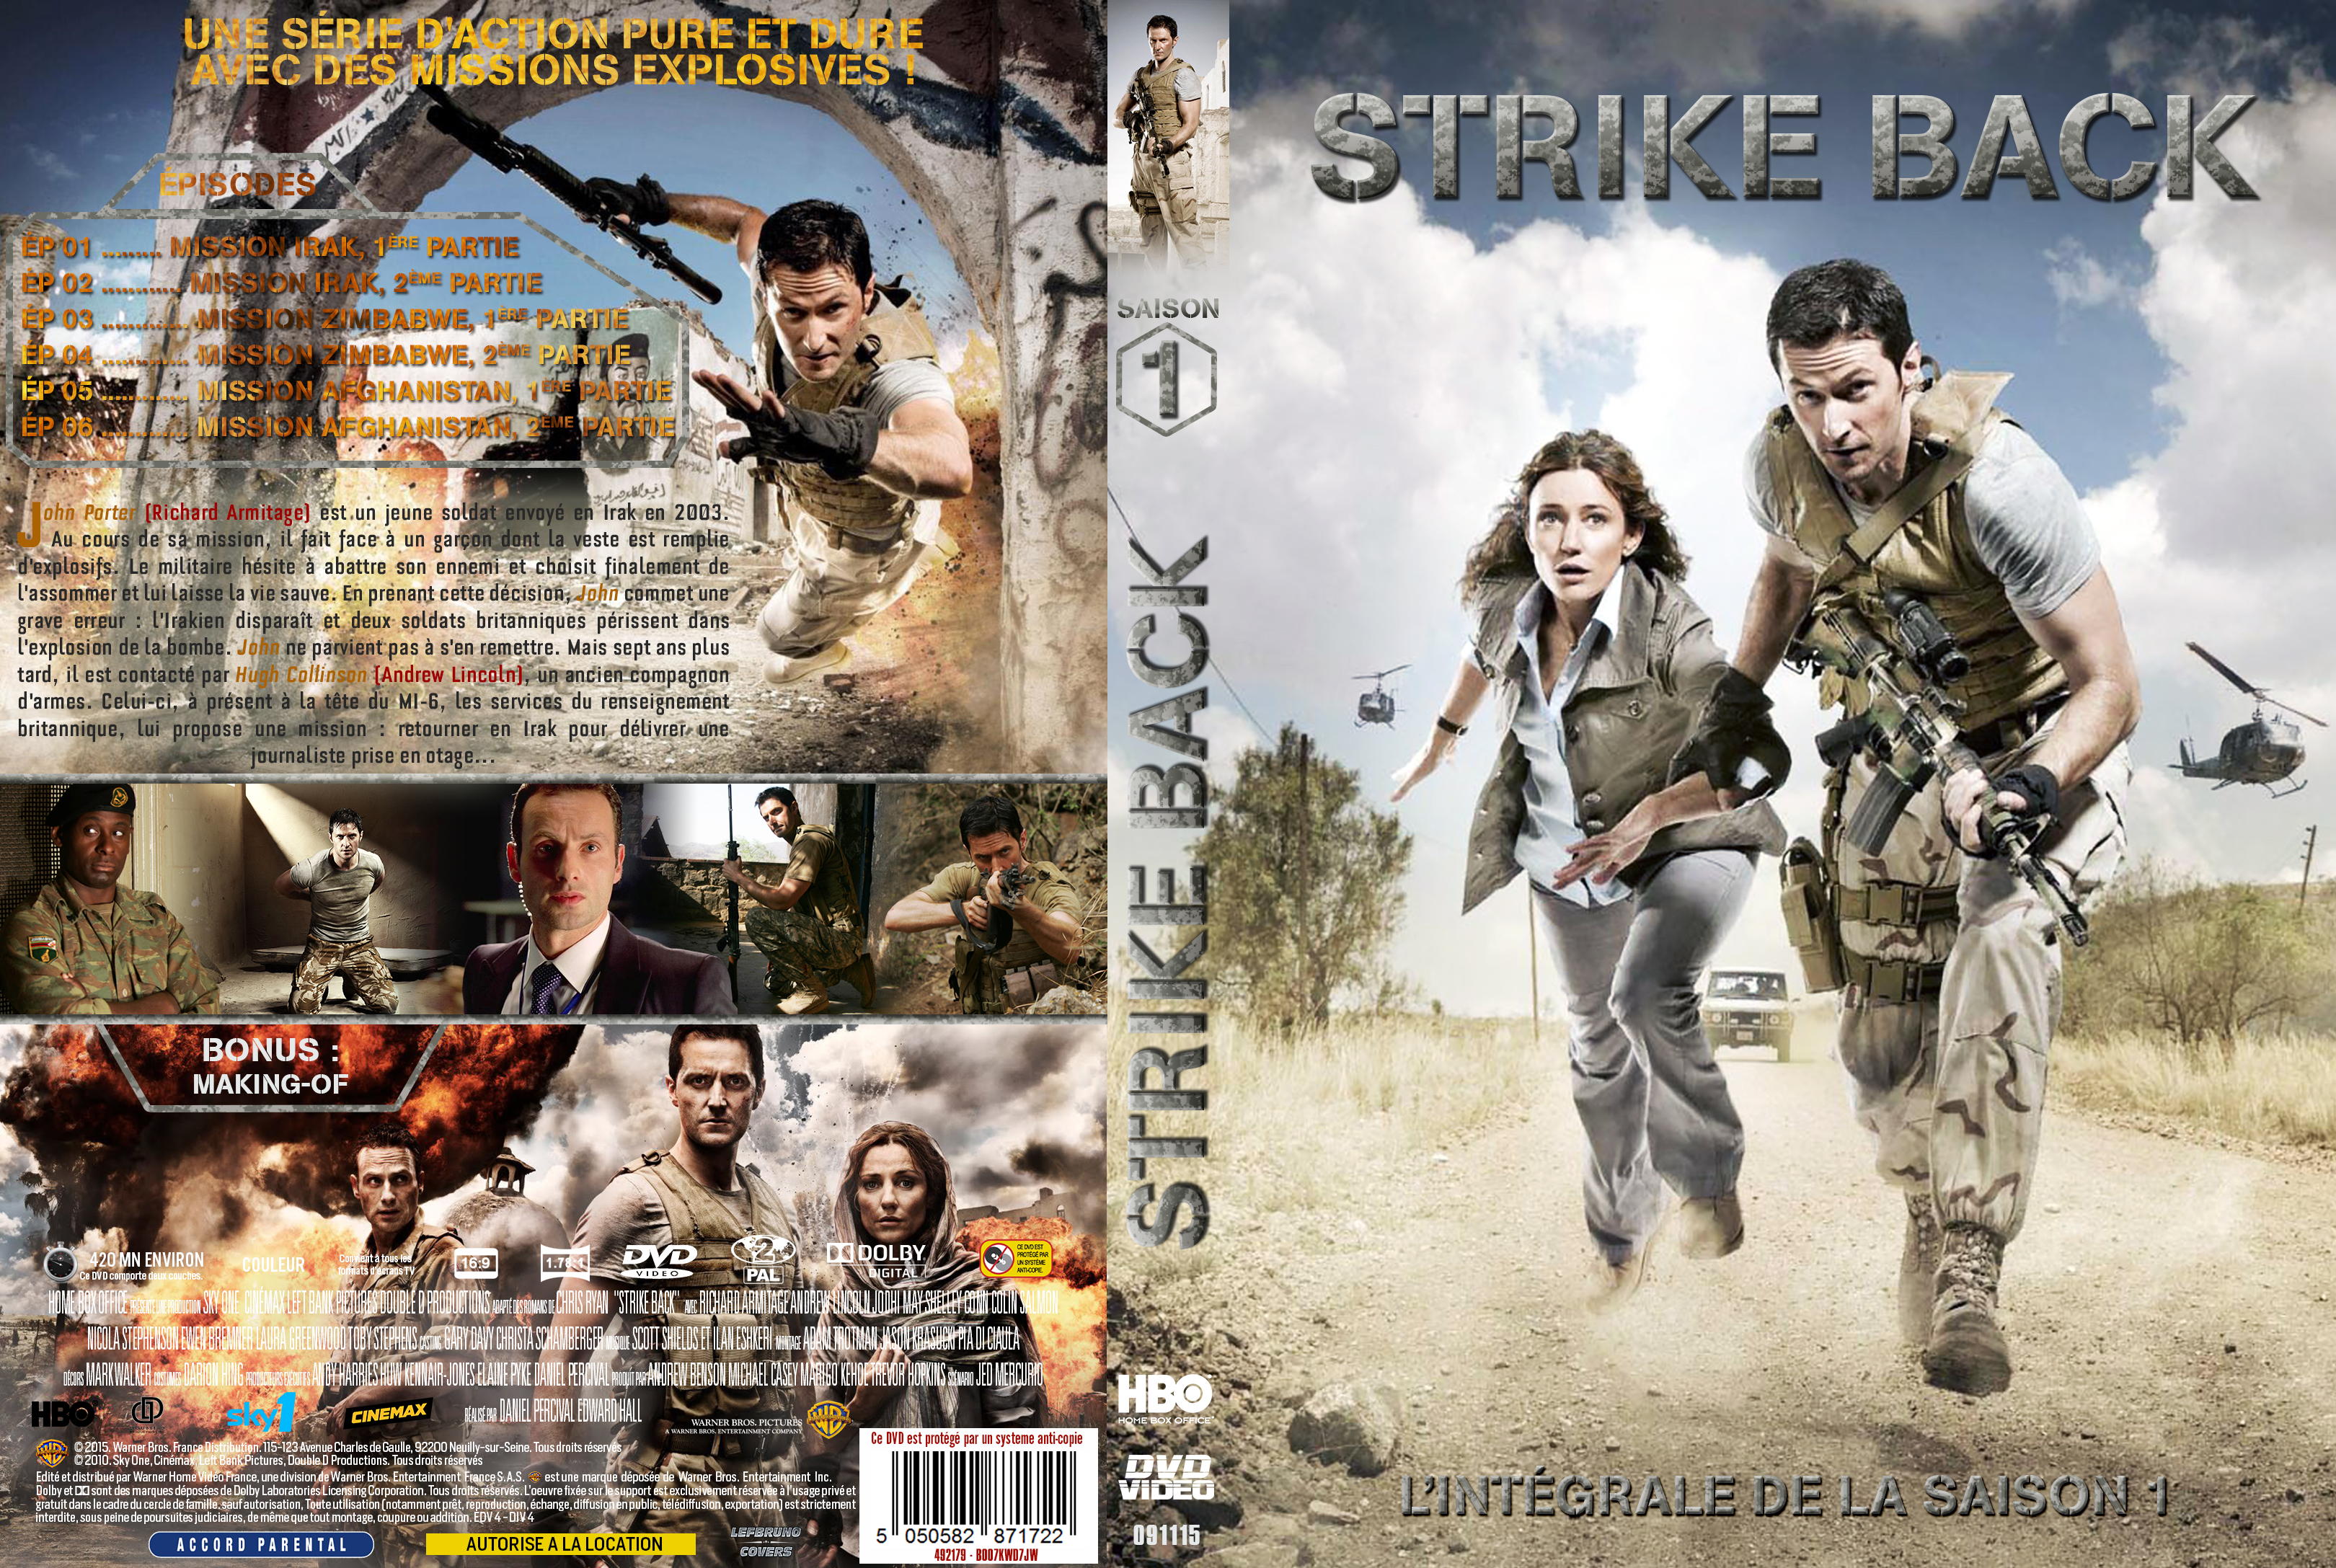 Jaquette DVD Strike back Saison 1 custom